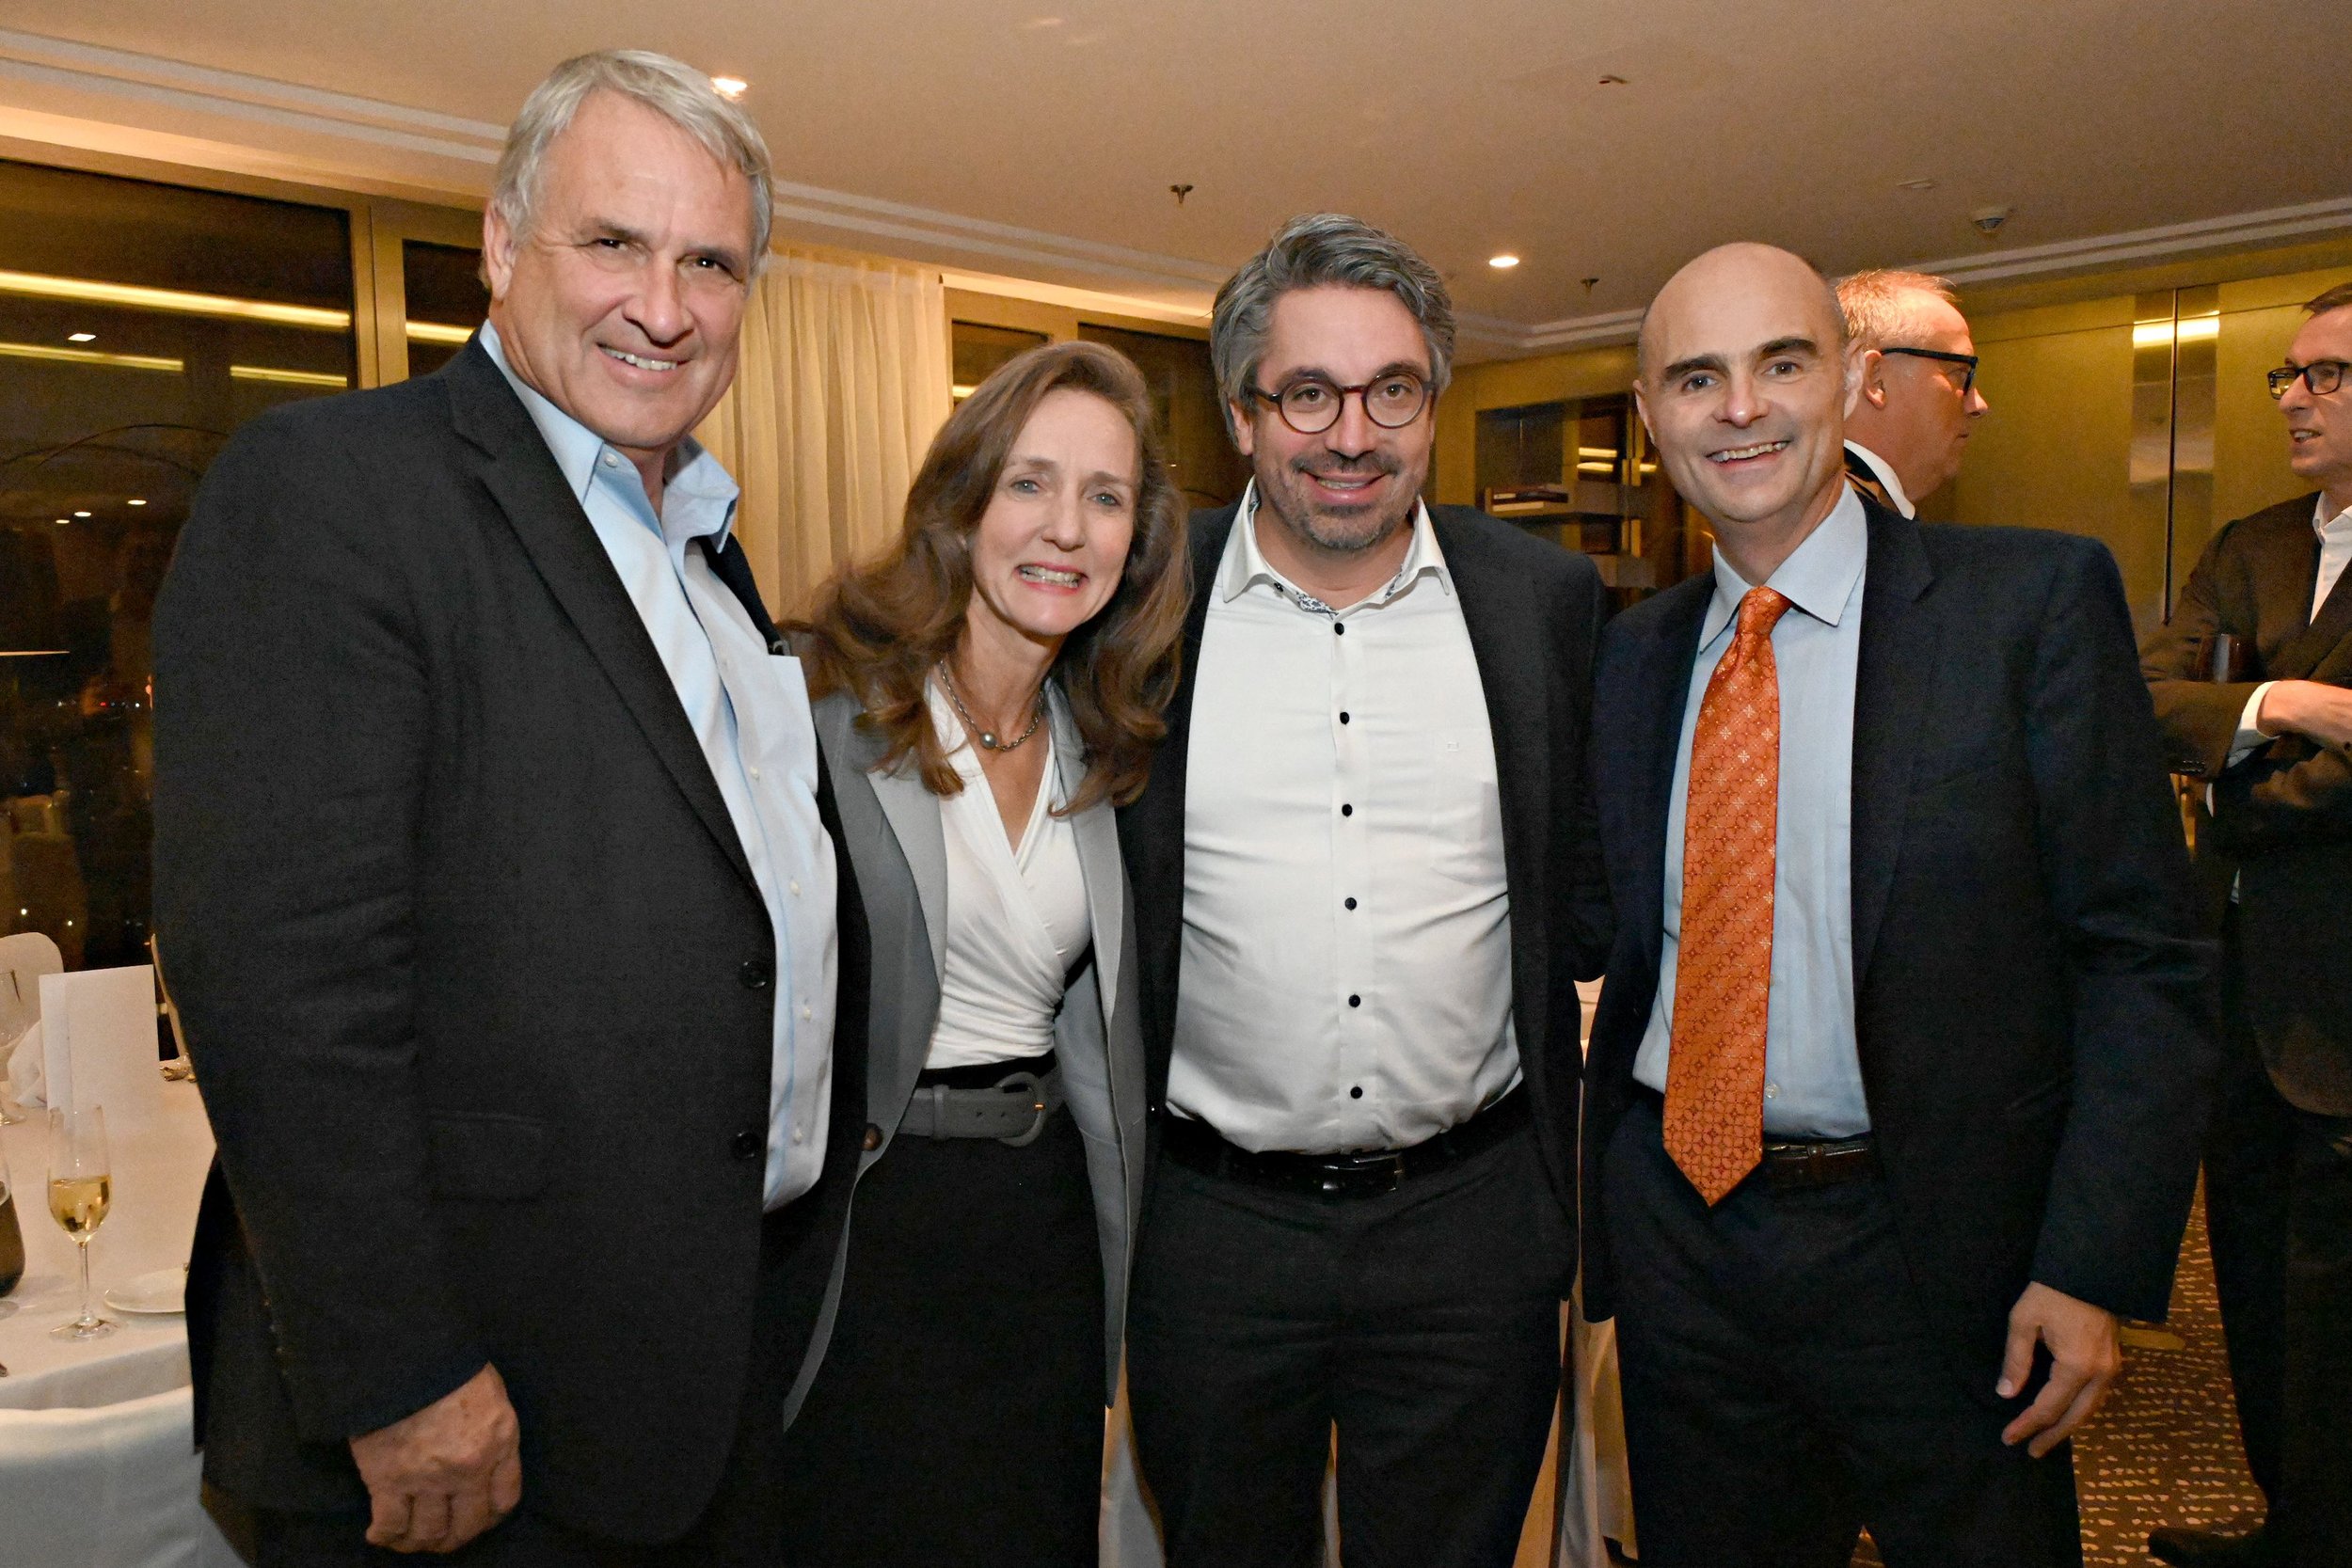  From left: Brian Rampp (Audi), GABC Chair Laura Lane, Stefan Rouenhoff, MP (German Bundestag), Sören Schmitz (PCI Gases)  